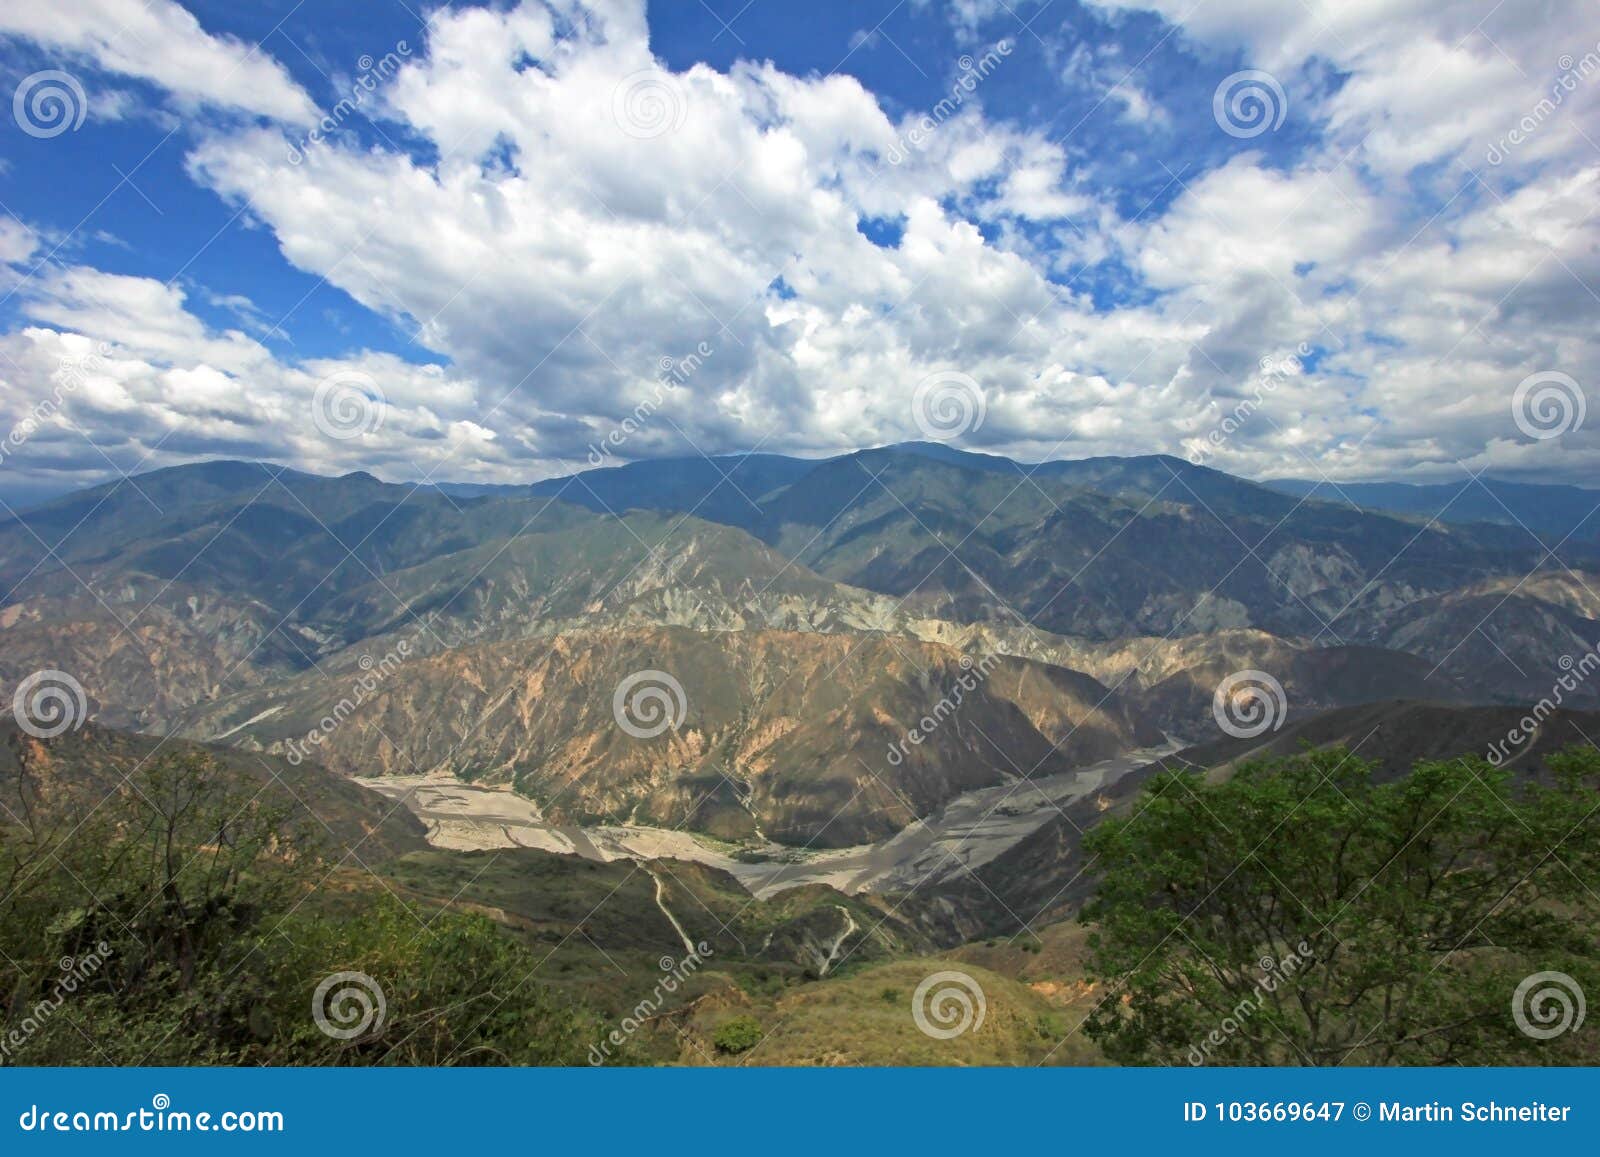 panoramic view of chicamocha canyon near bucaramanga in santander, colombia